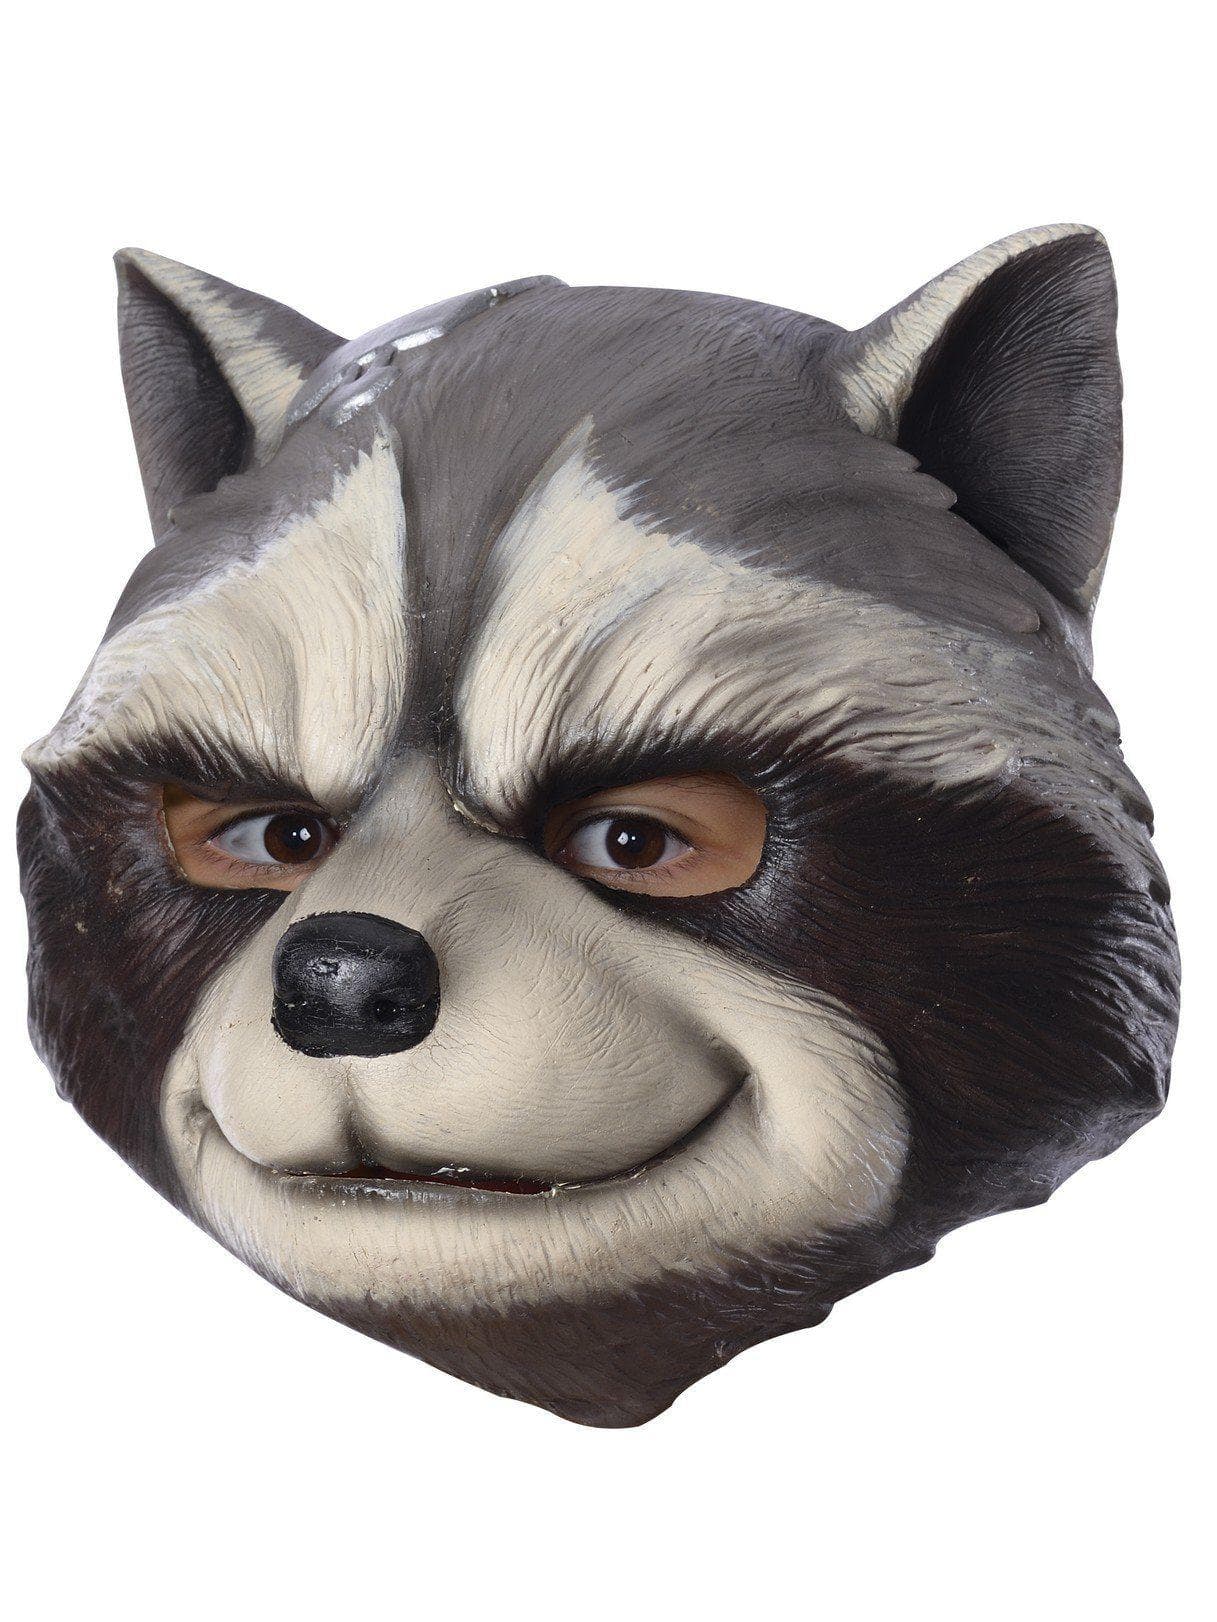 Boys' Avengers: Infinity War Rocket Raccoon Mask - costumes.com